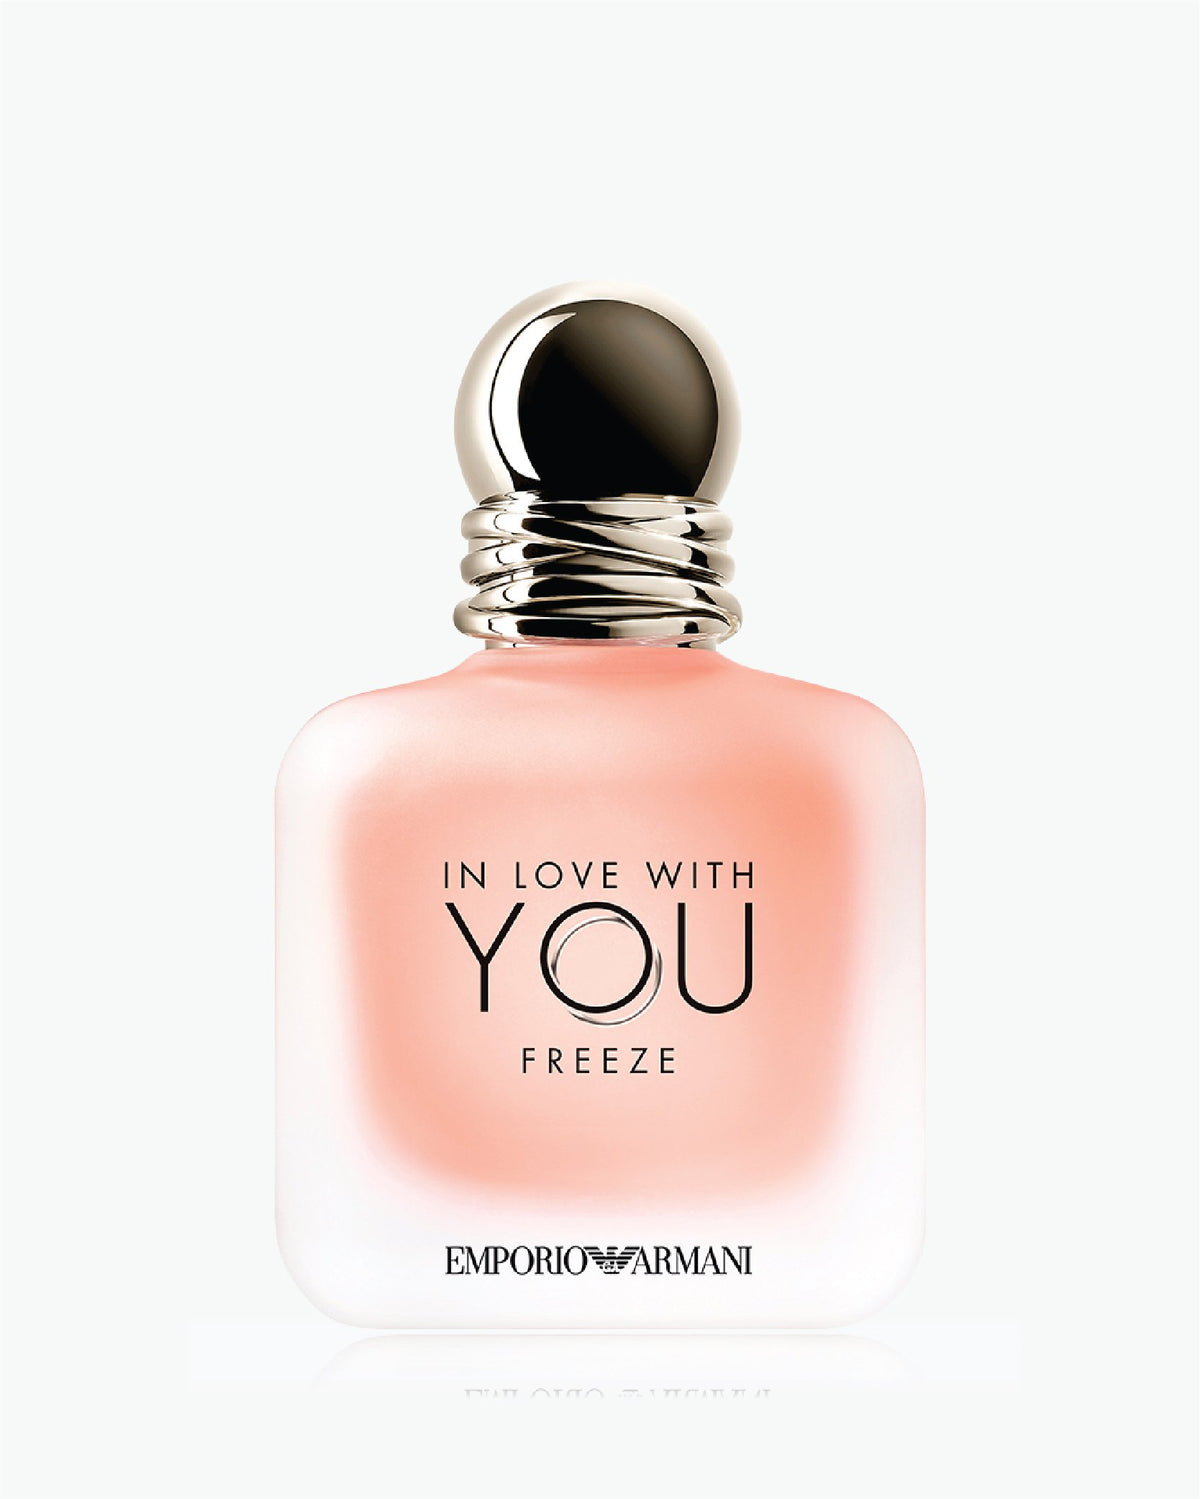 Emporio Armani In Love With You Freeze Eau De Parfum